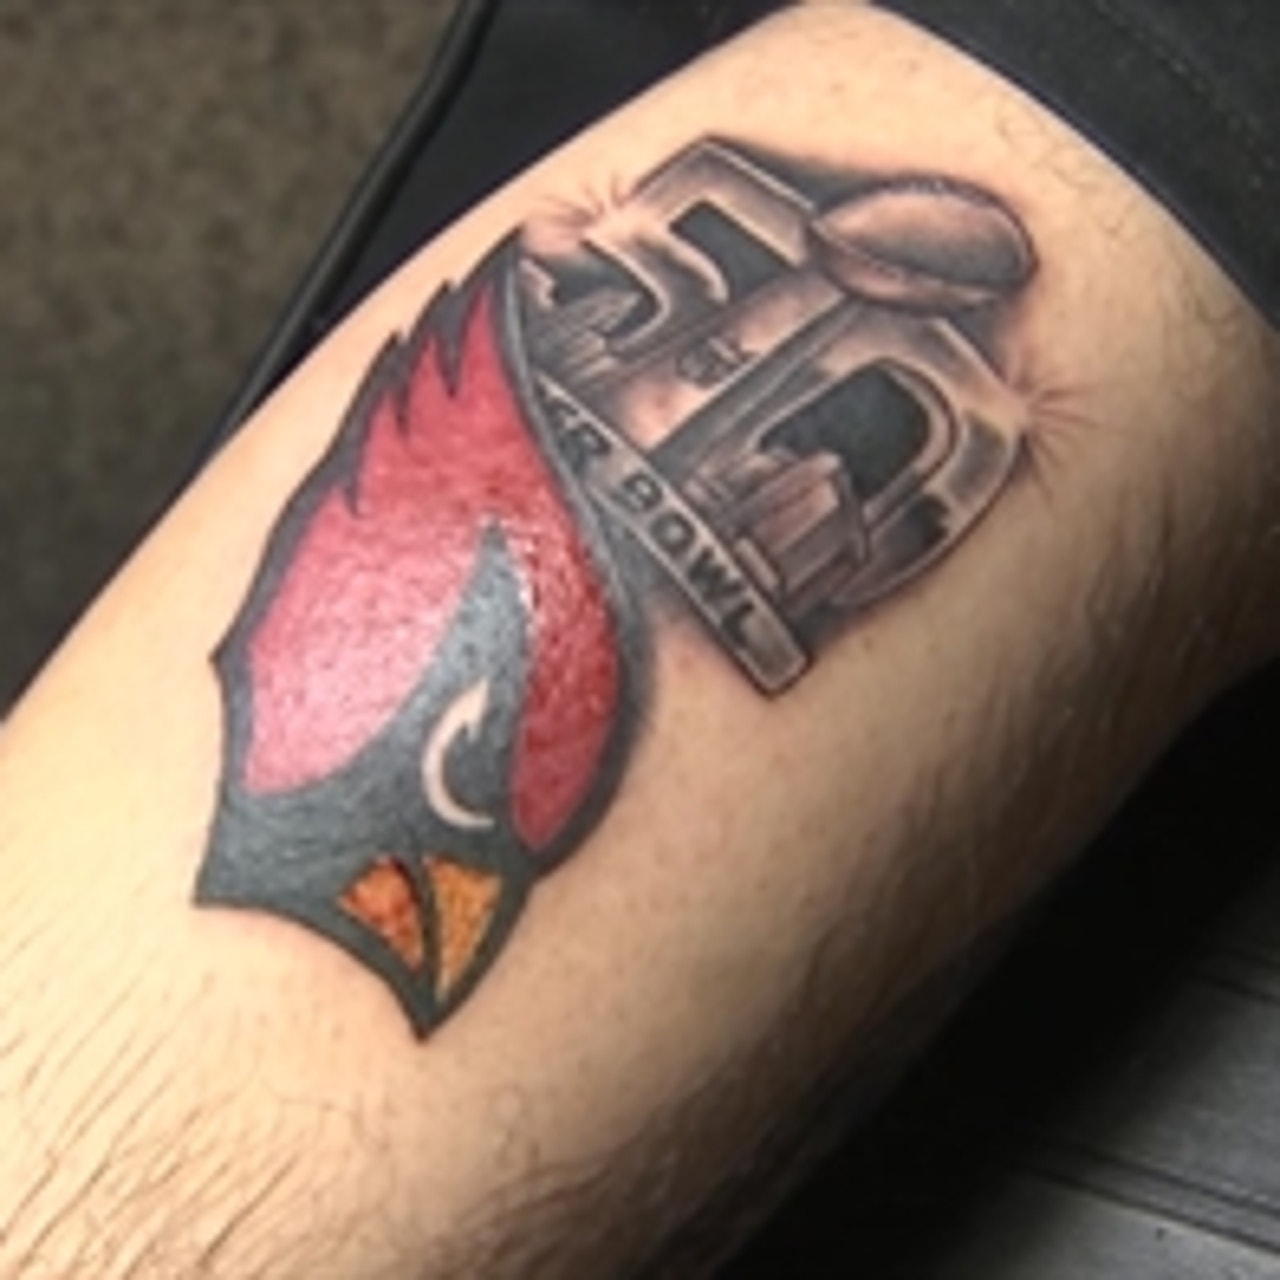 This Arizona Cardinals fan might regret his new Super Bowl 50 tattoo